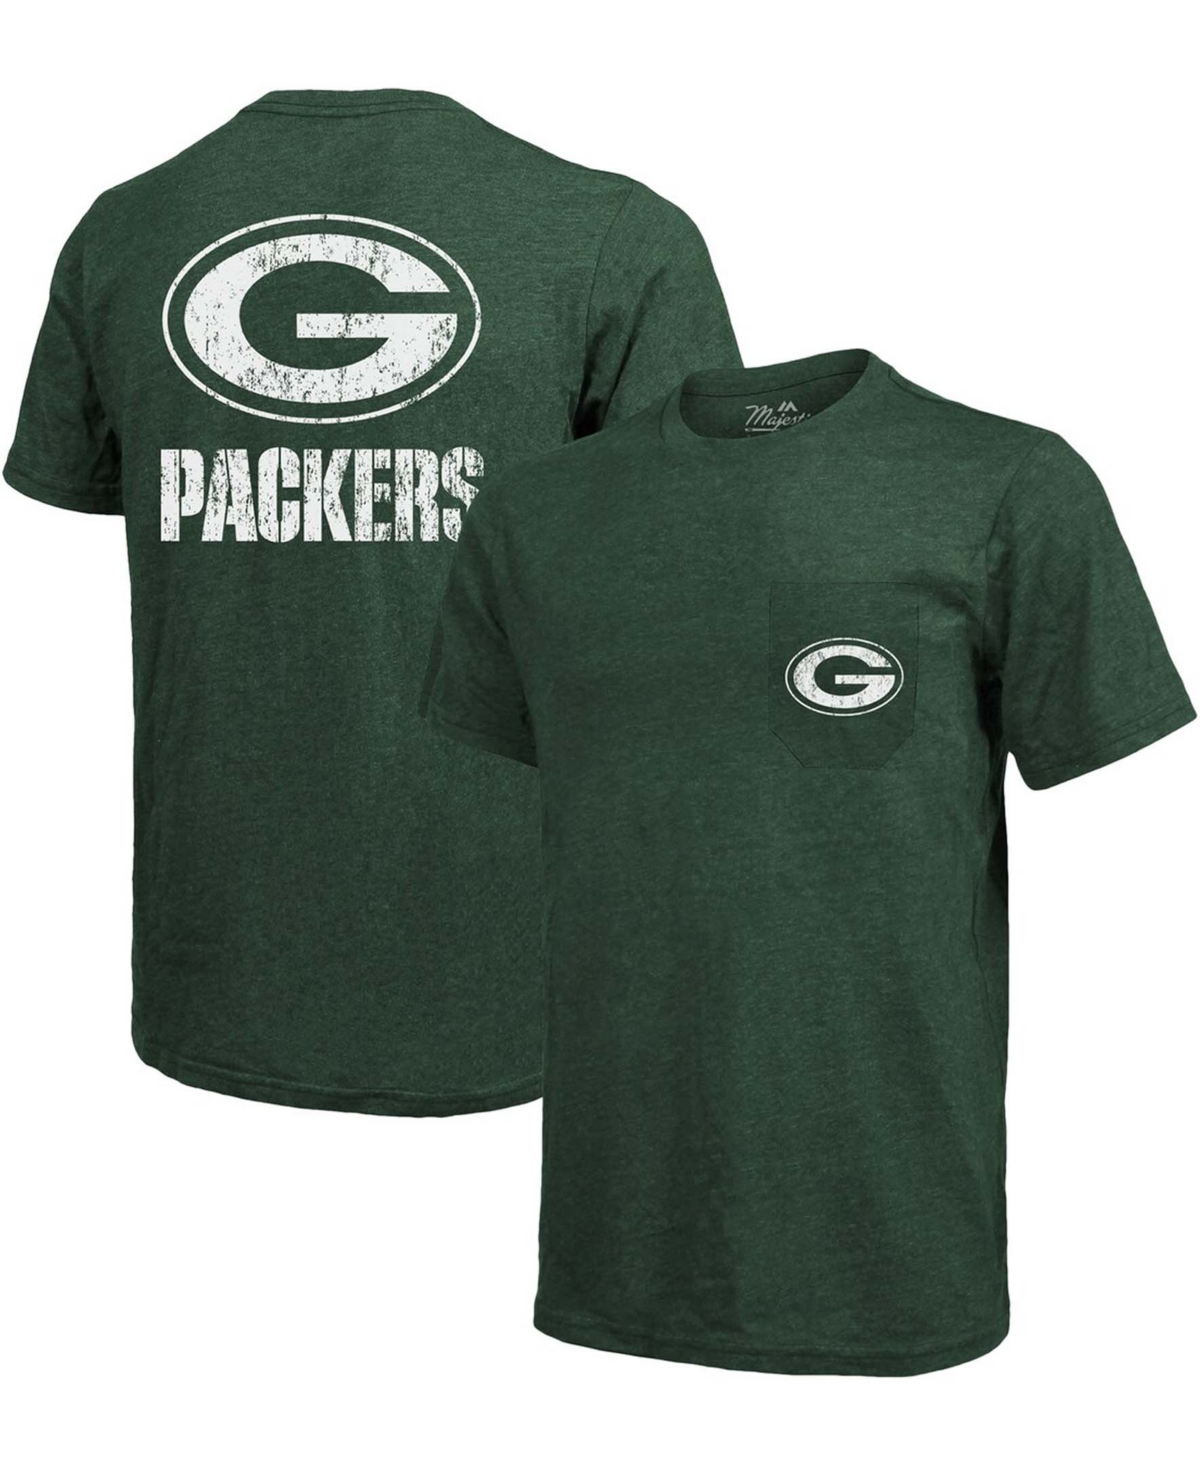 Green Bay Packers Tri-Blend Pocket T-shirt - Heathered Green - Green